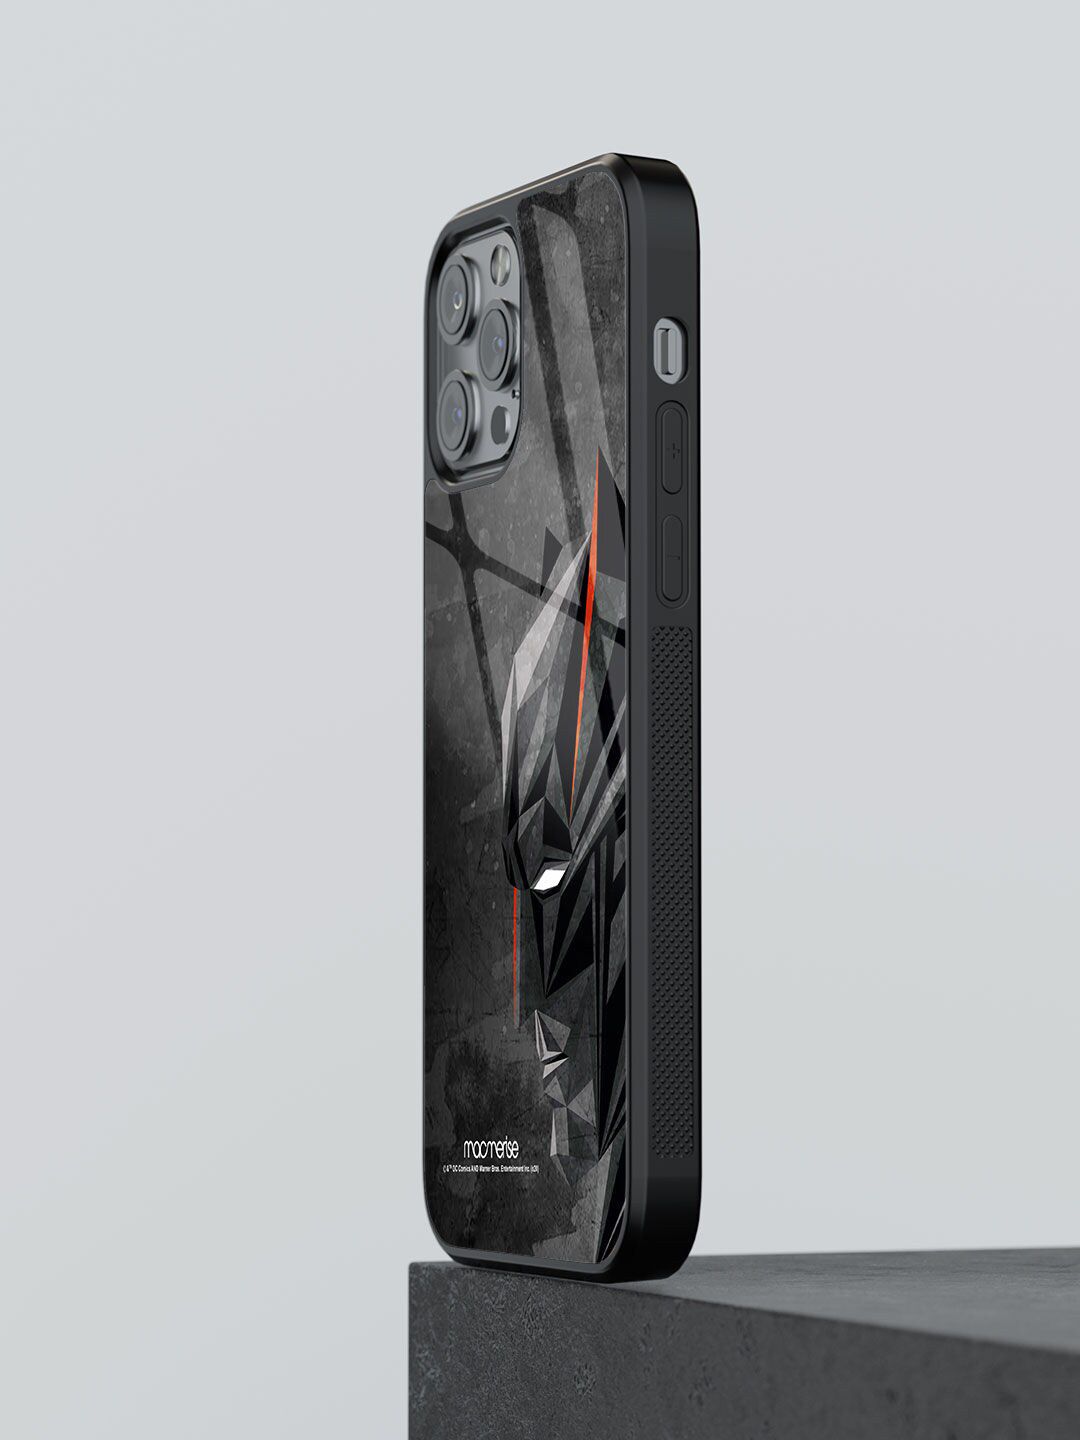 macmerise Grey Printed Camo Glass iPhone 12 Pro Max Back Case Price in India